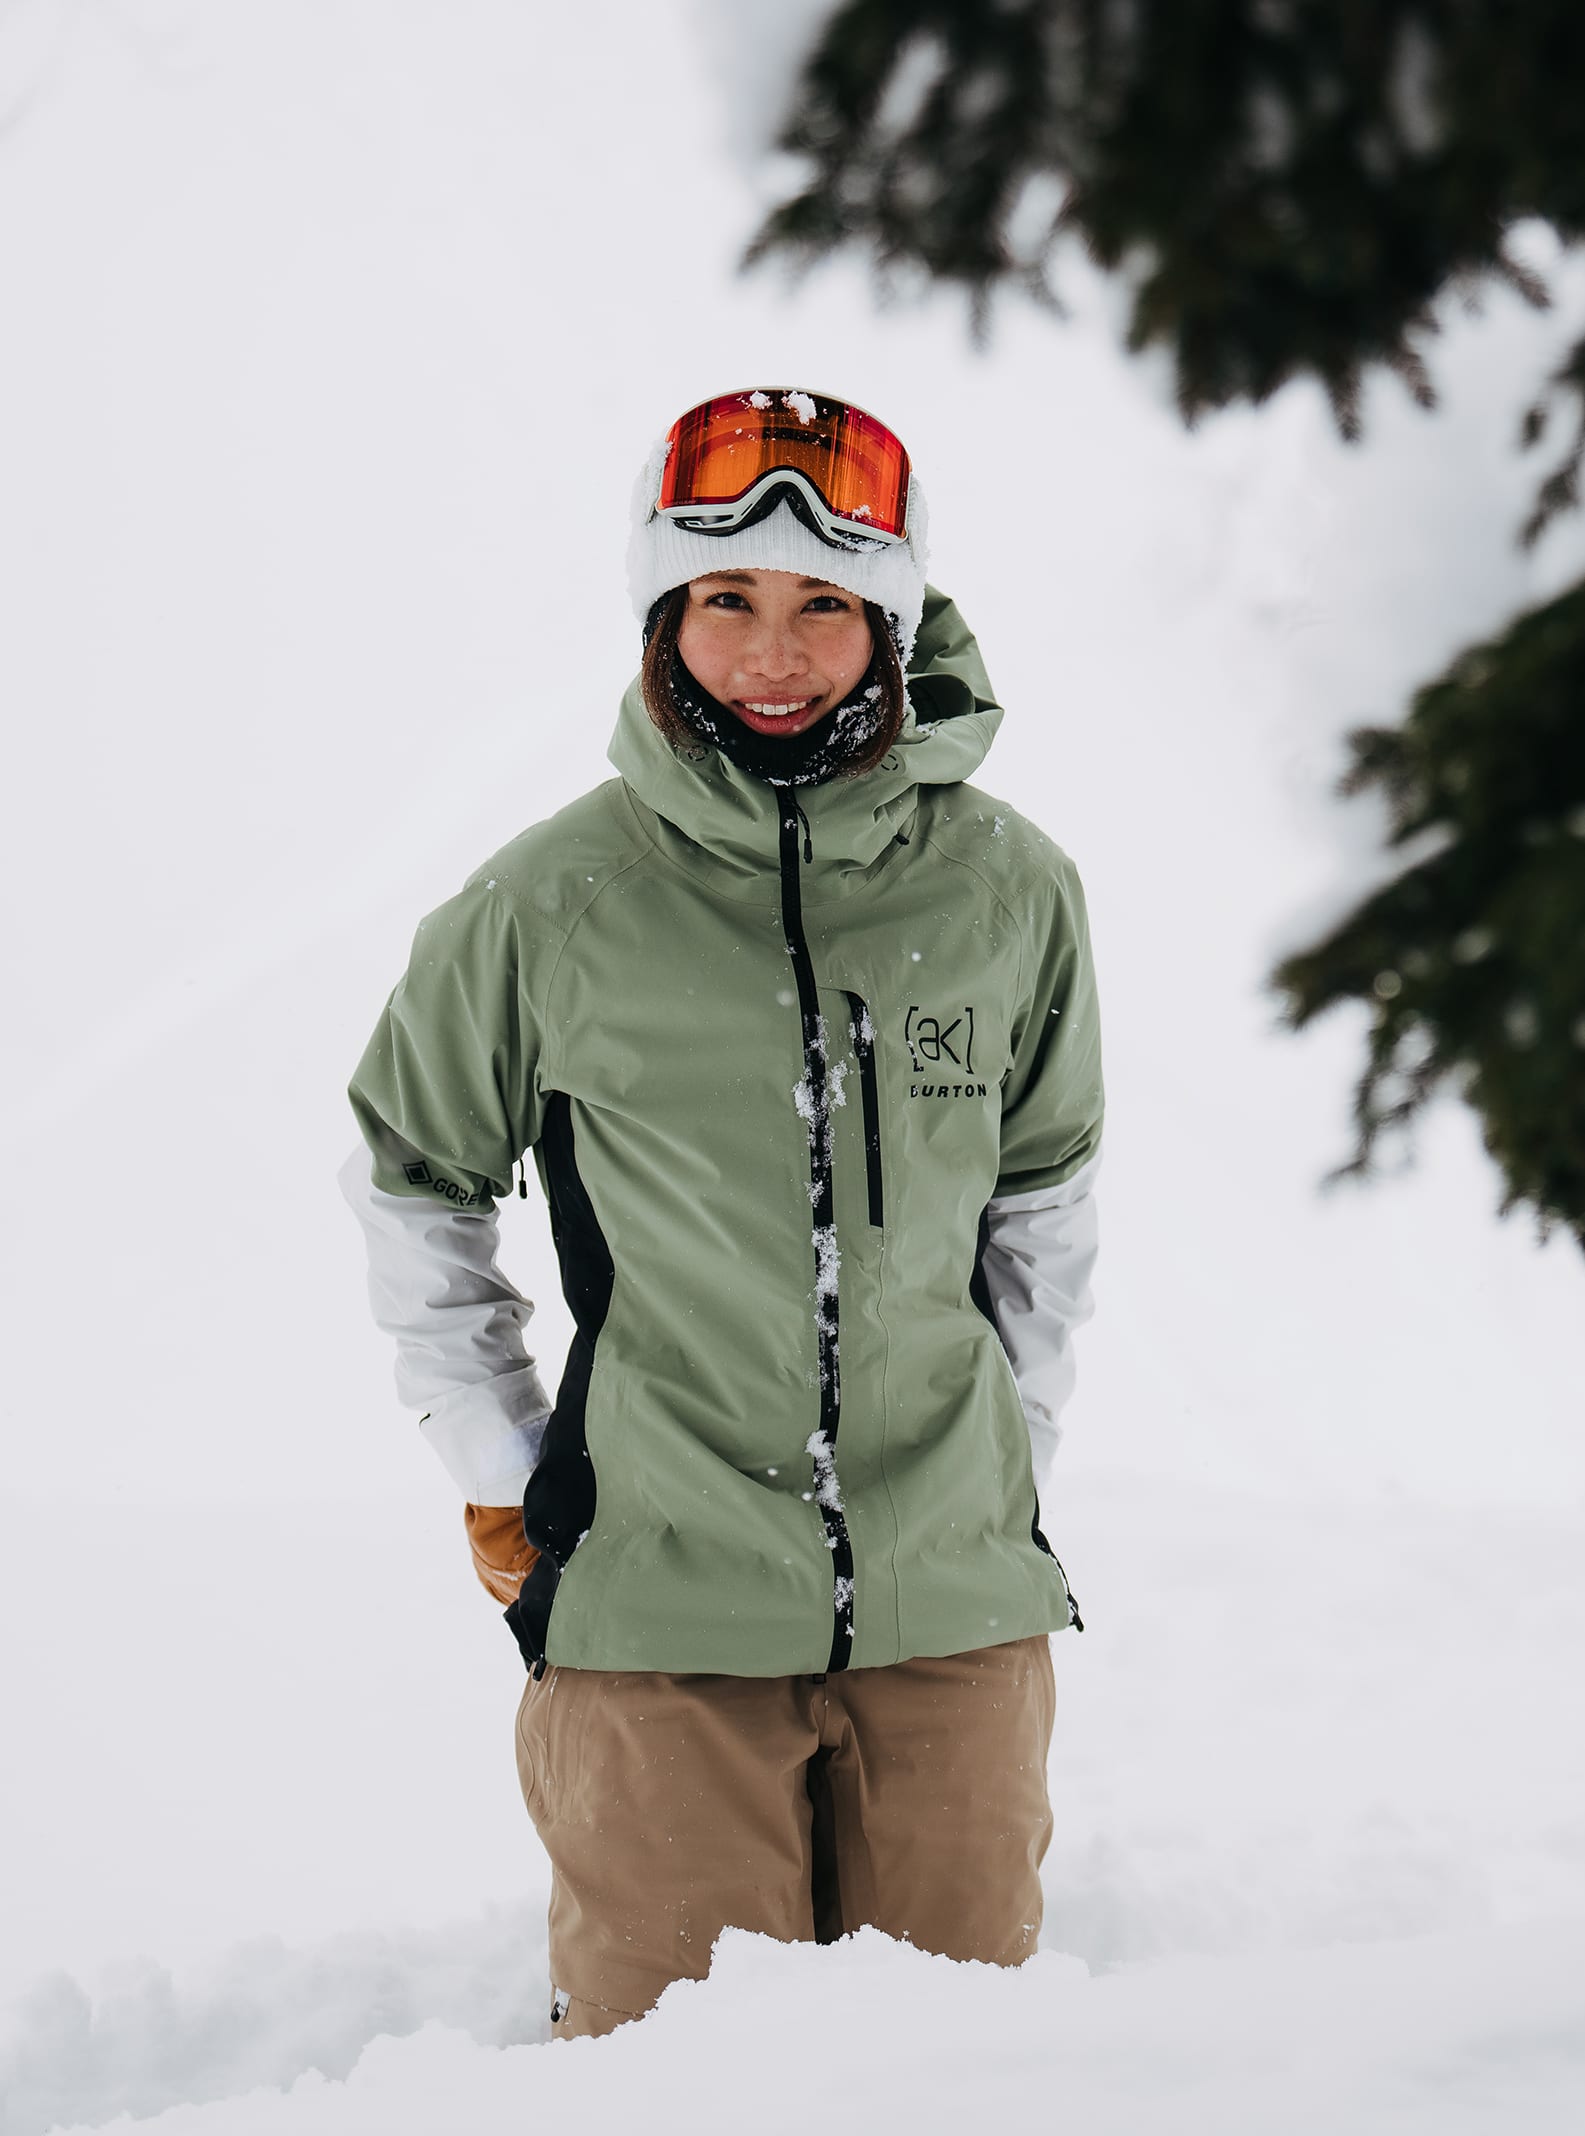 Women's [ak] Upshift GORE-TEX 2L Jacket | Burton.com Winter 2023 US